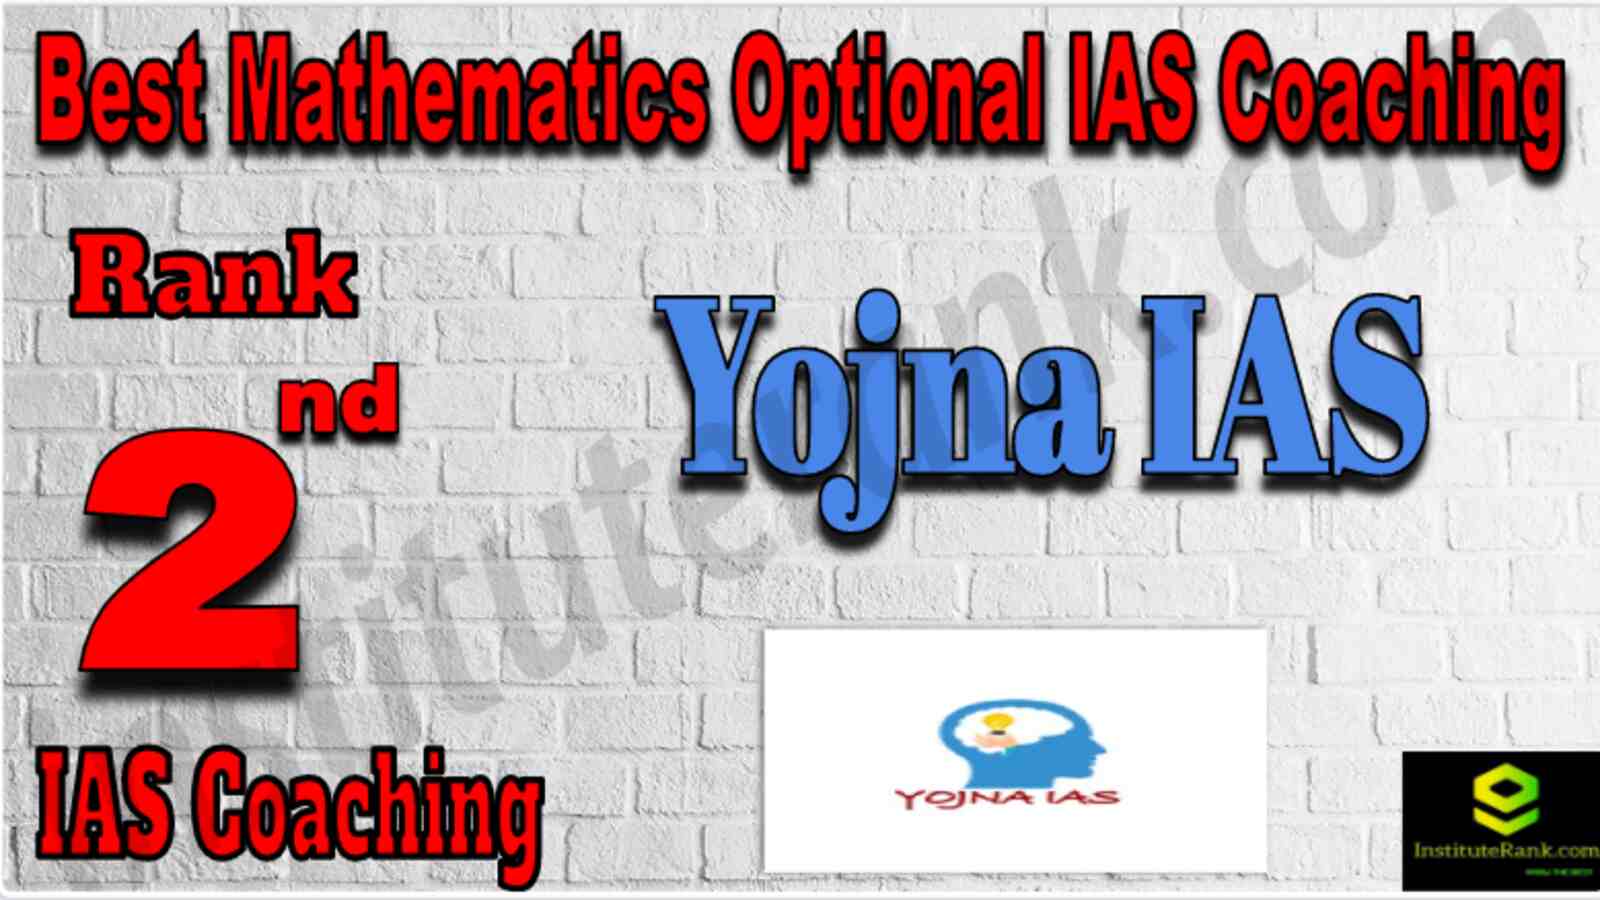 Rank 2 Best Mathematics Optional IAS Coachings